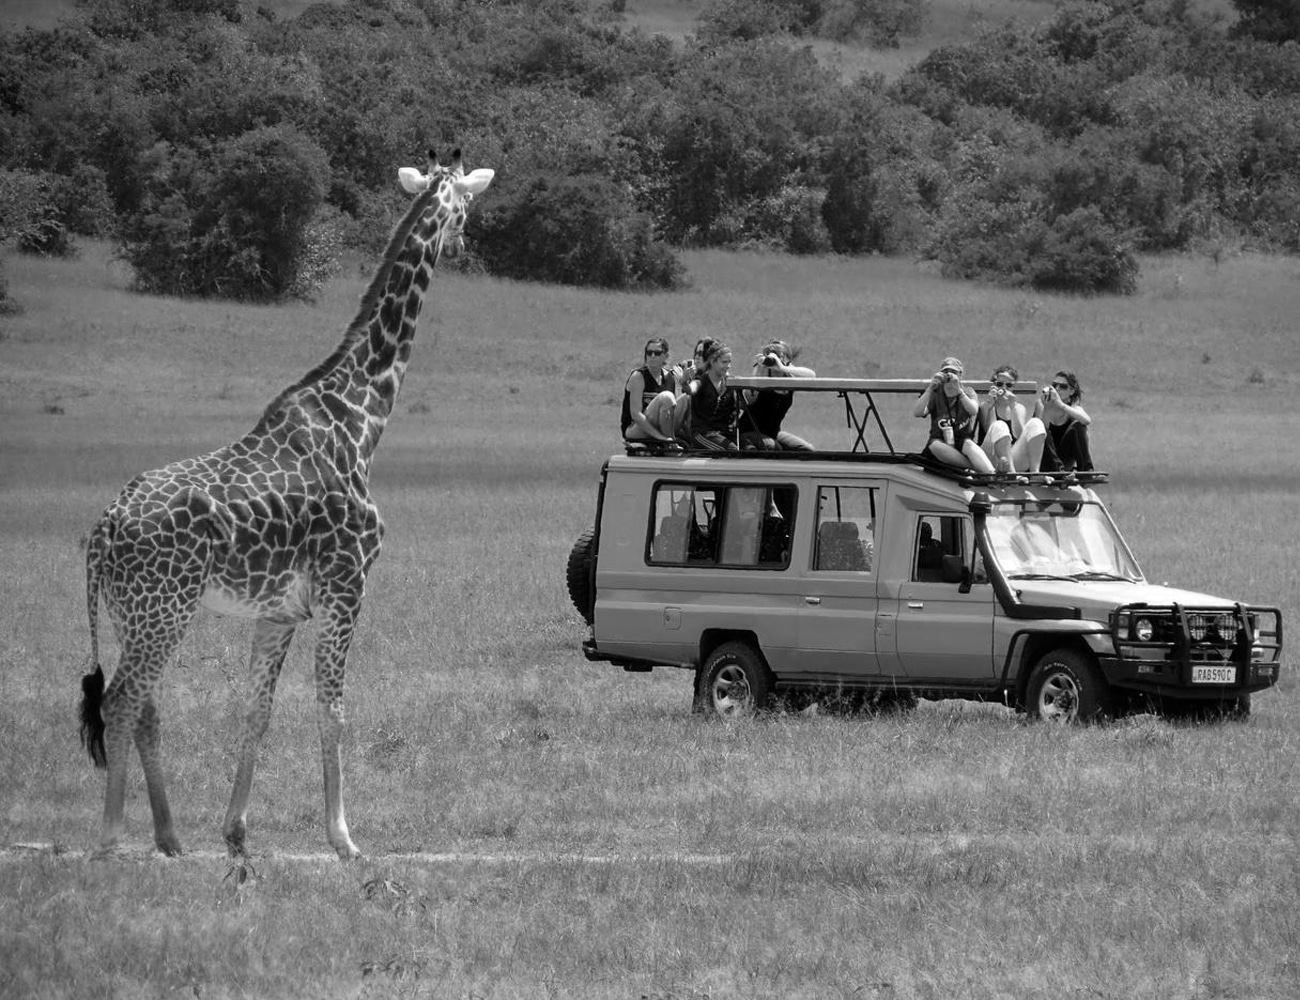 Overseas Adventure Travel Tours in the Serengeti